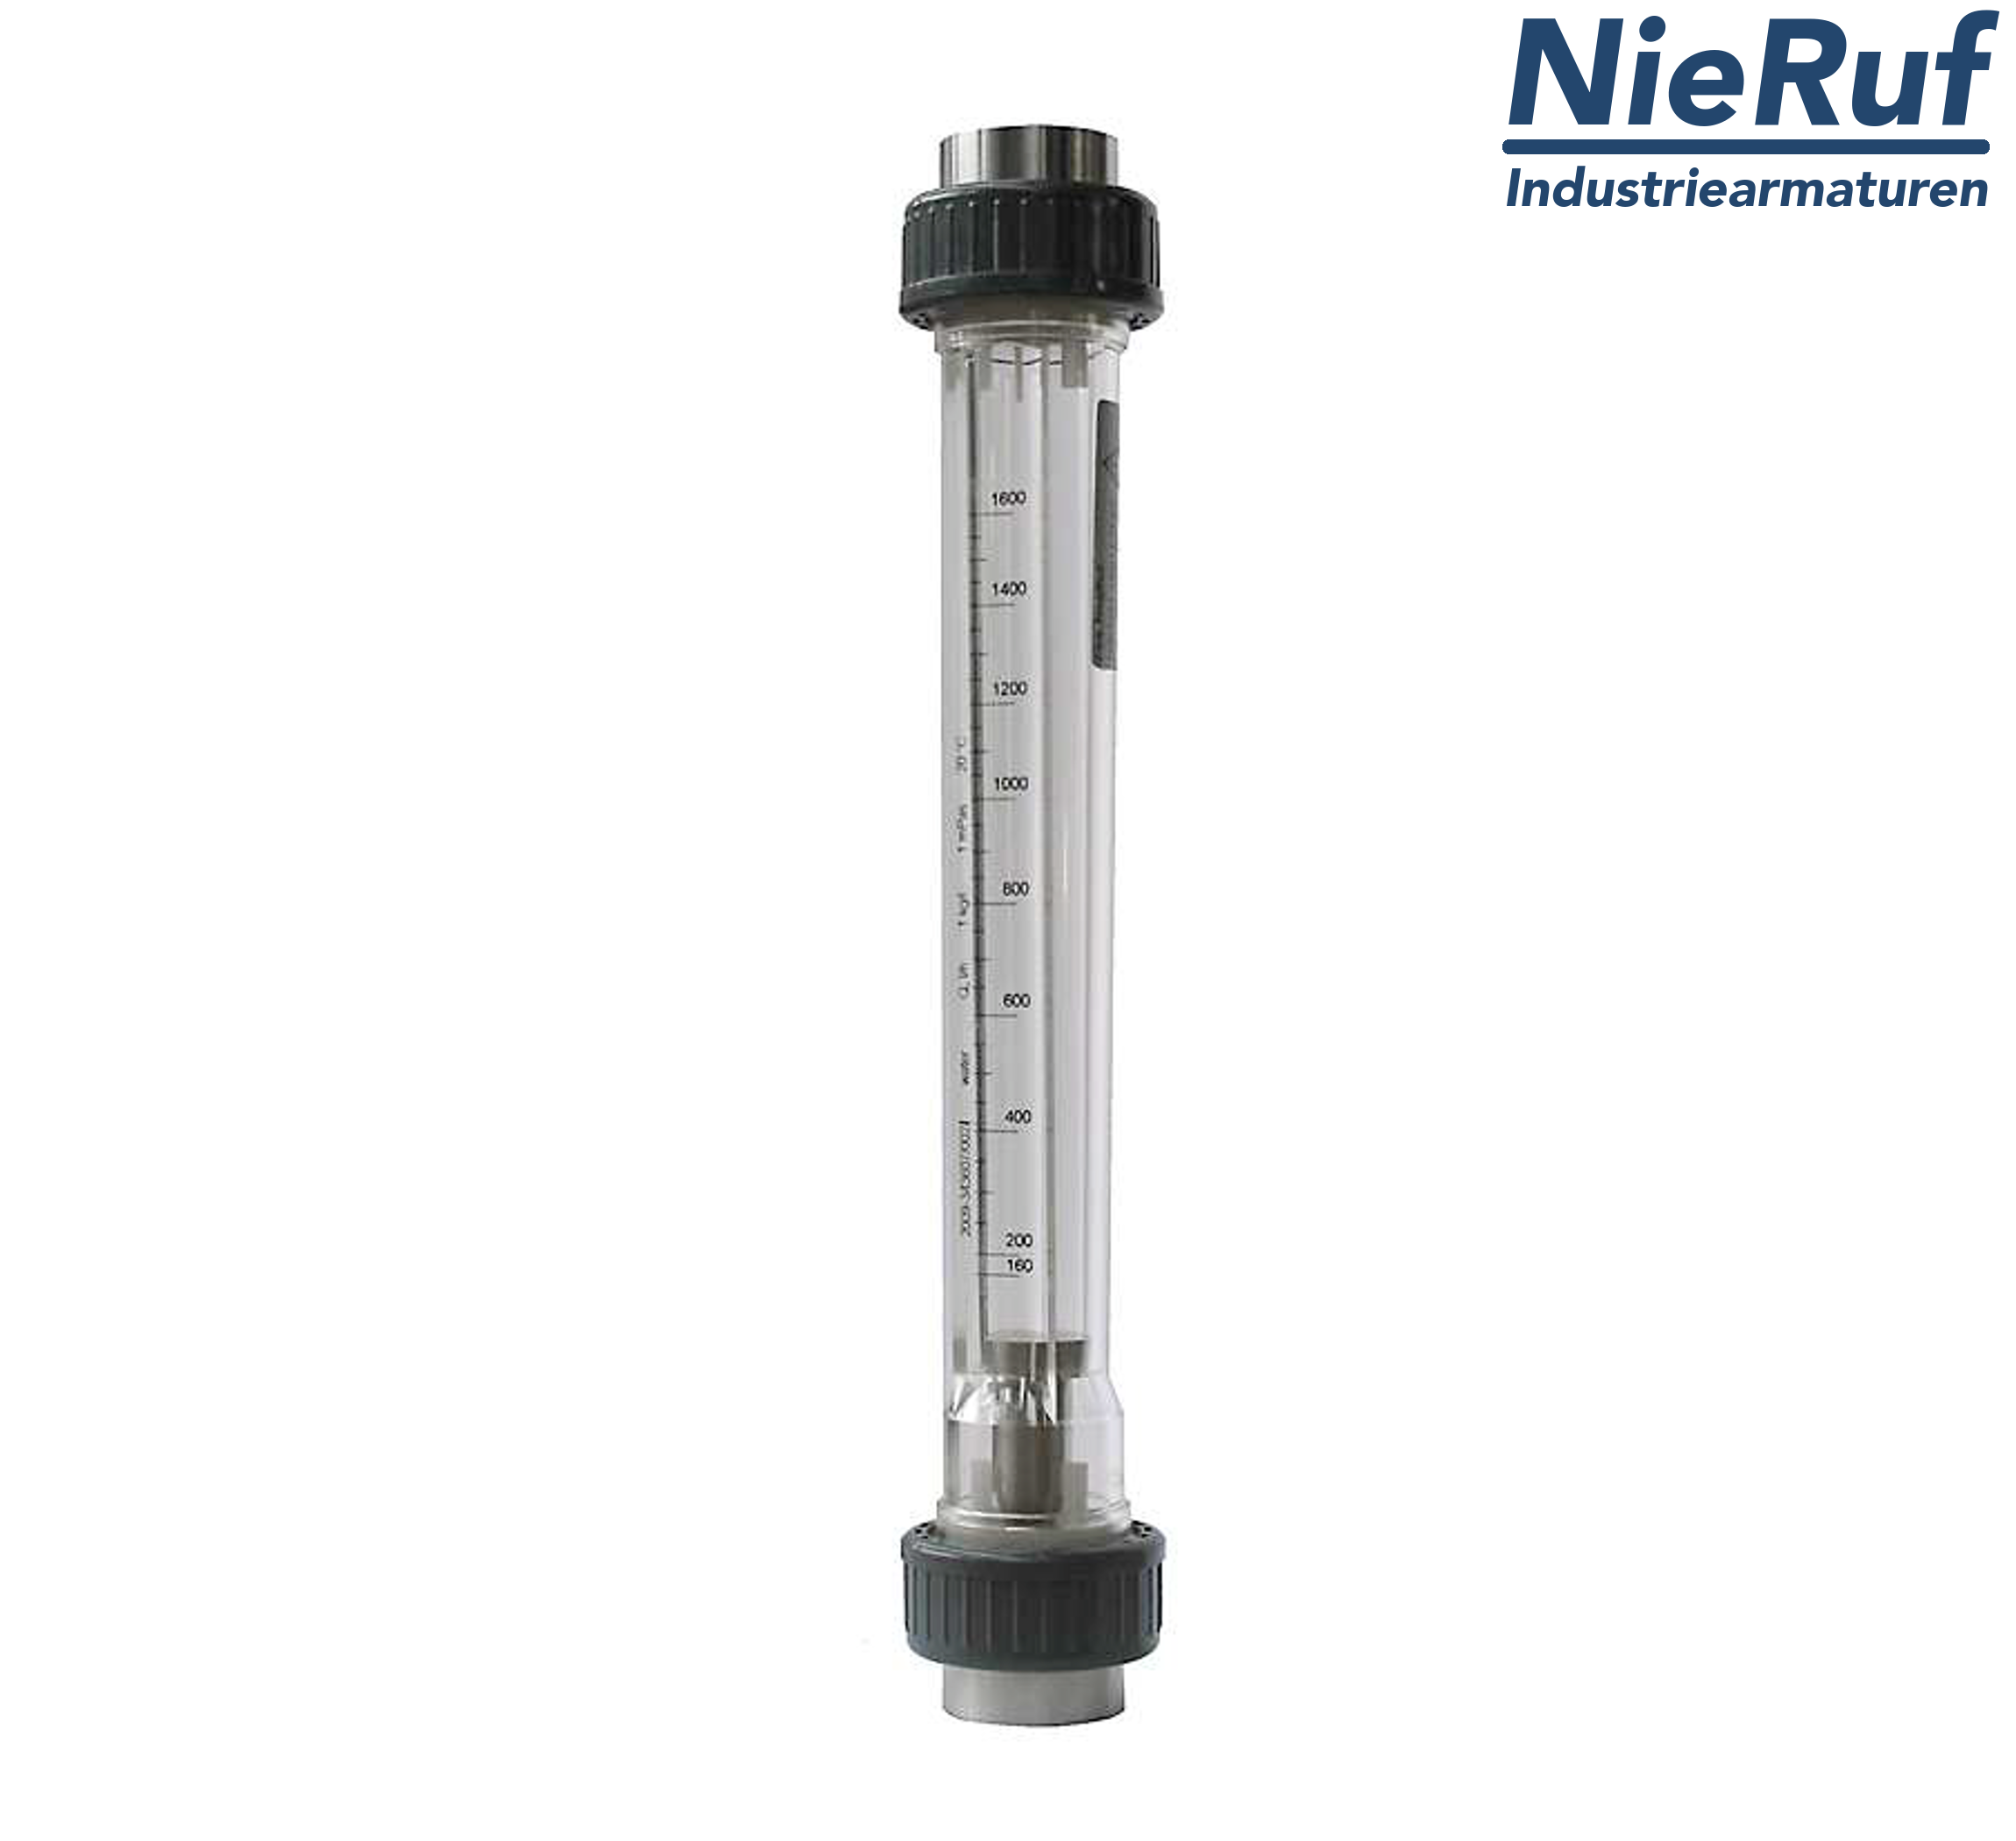 Variable area flowmeter 1" inch 160.0 - 1600 l/h water EPDM